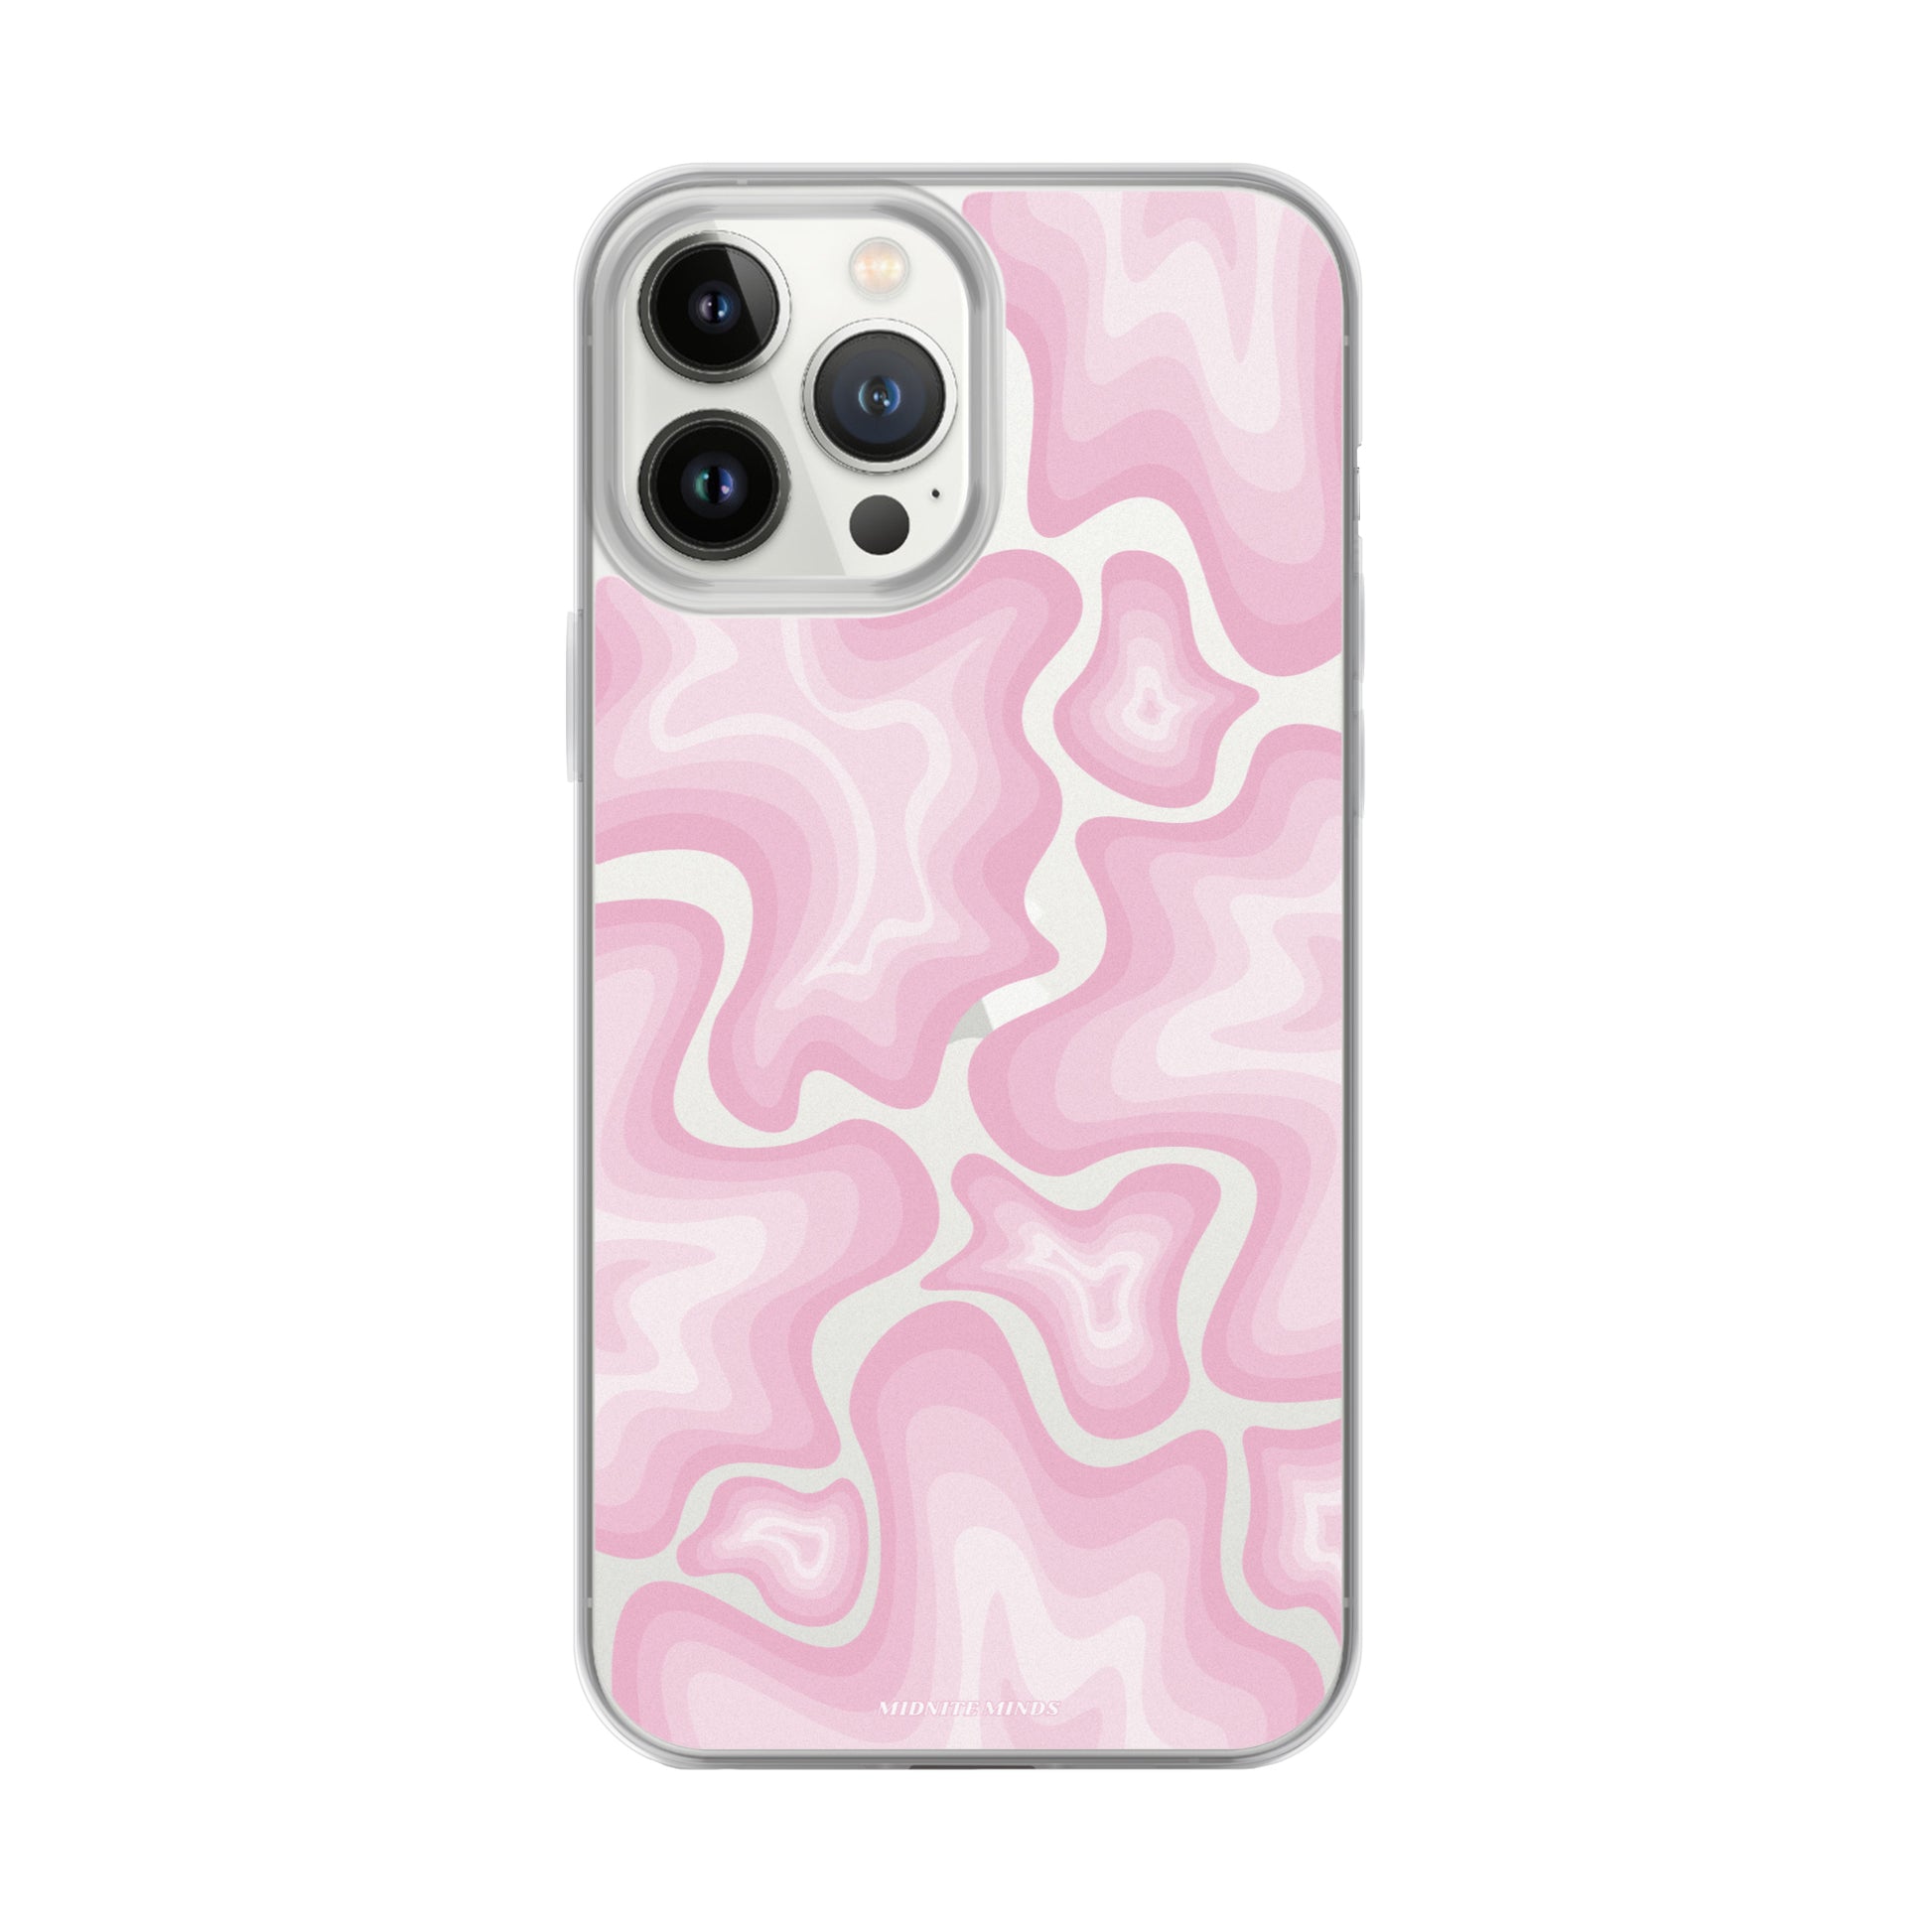 rose ripple iPhone case, rose iPhone case, pink iPhone case, pink aesthetic phone case